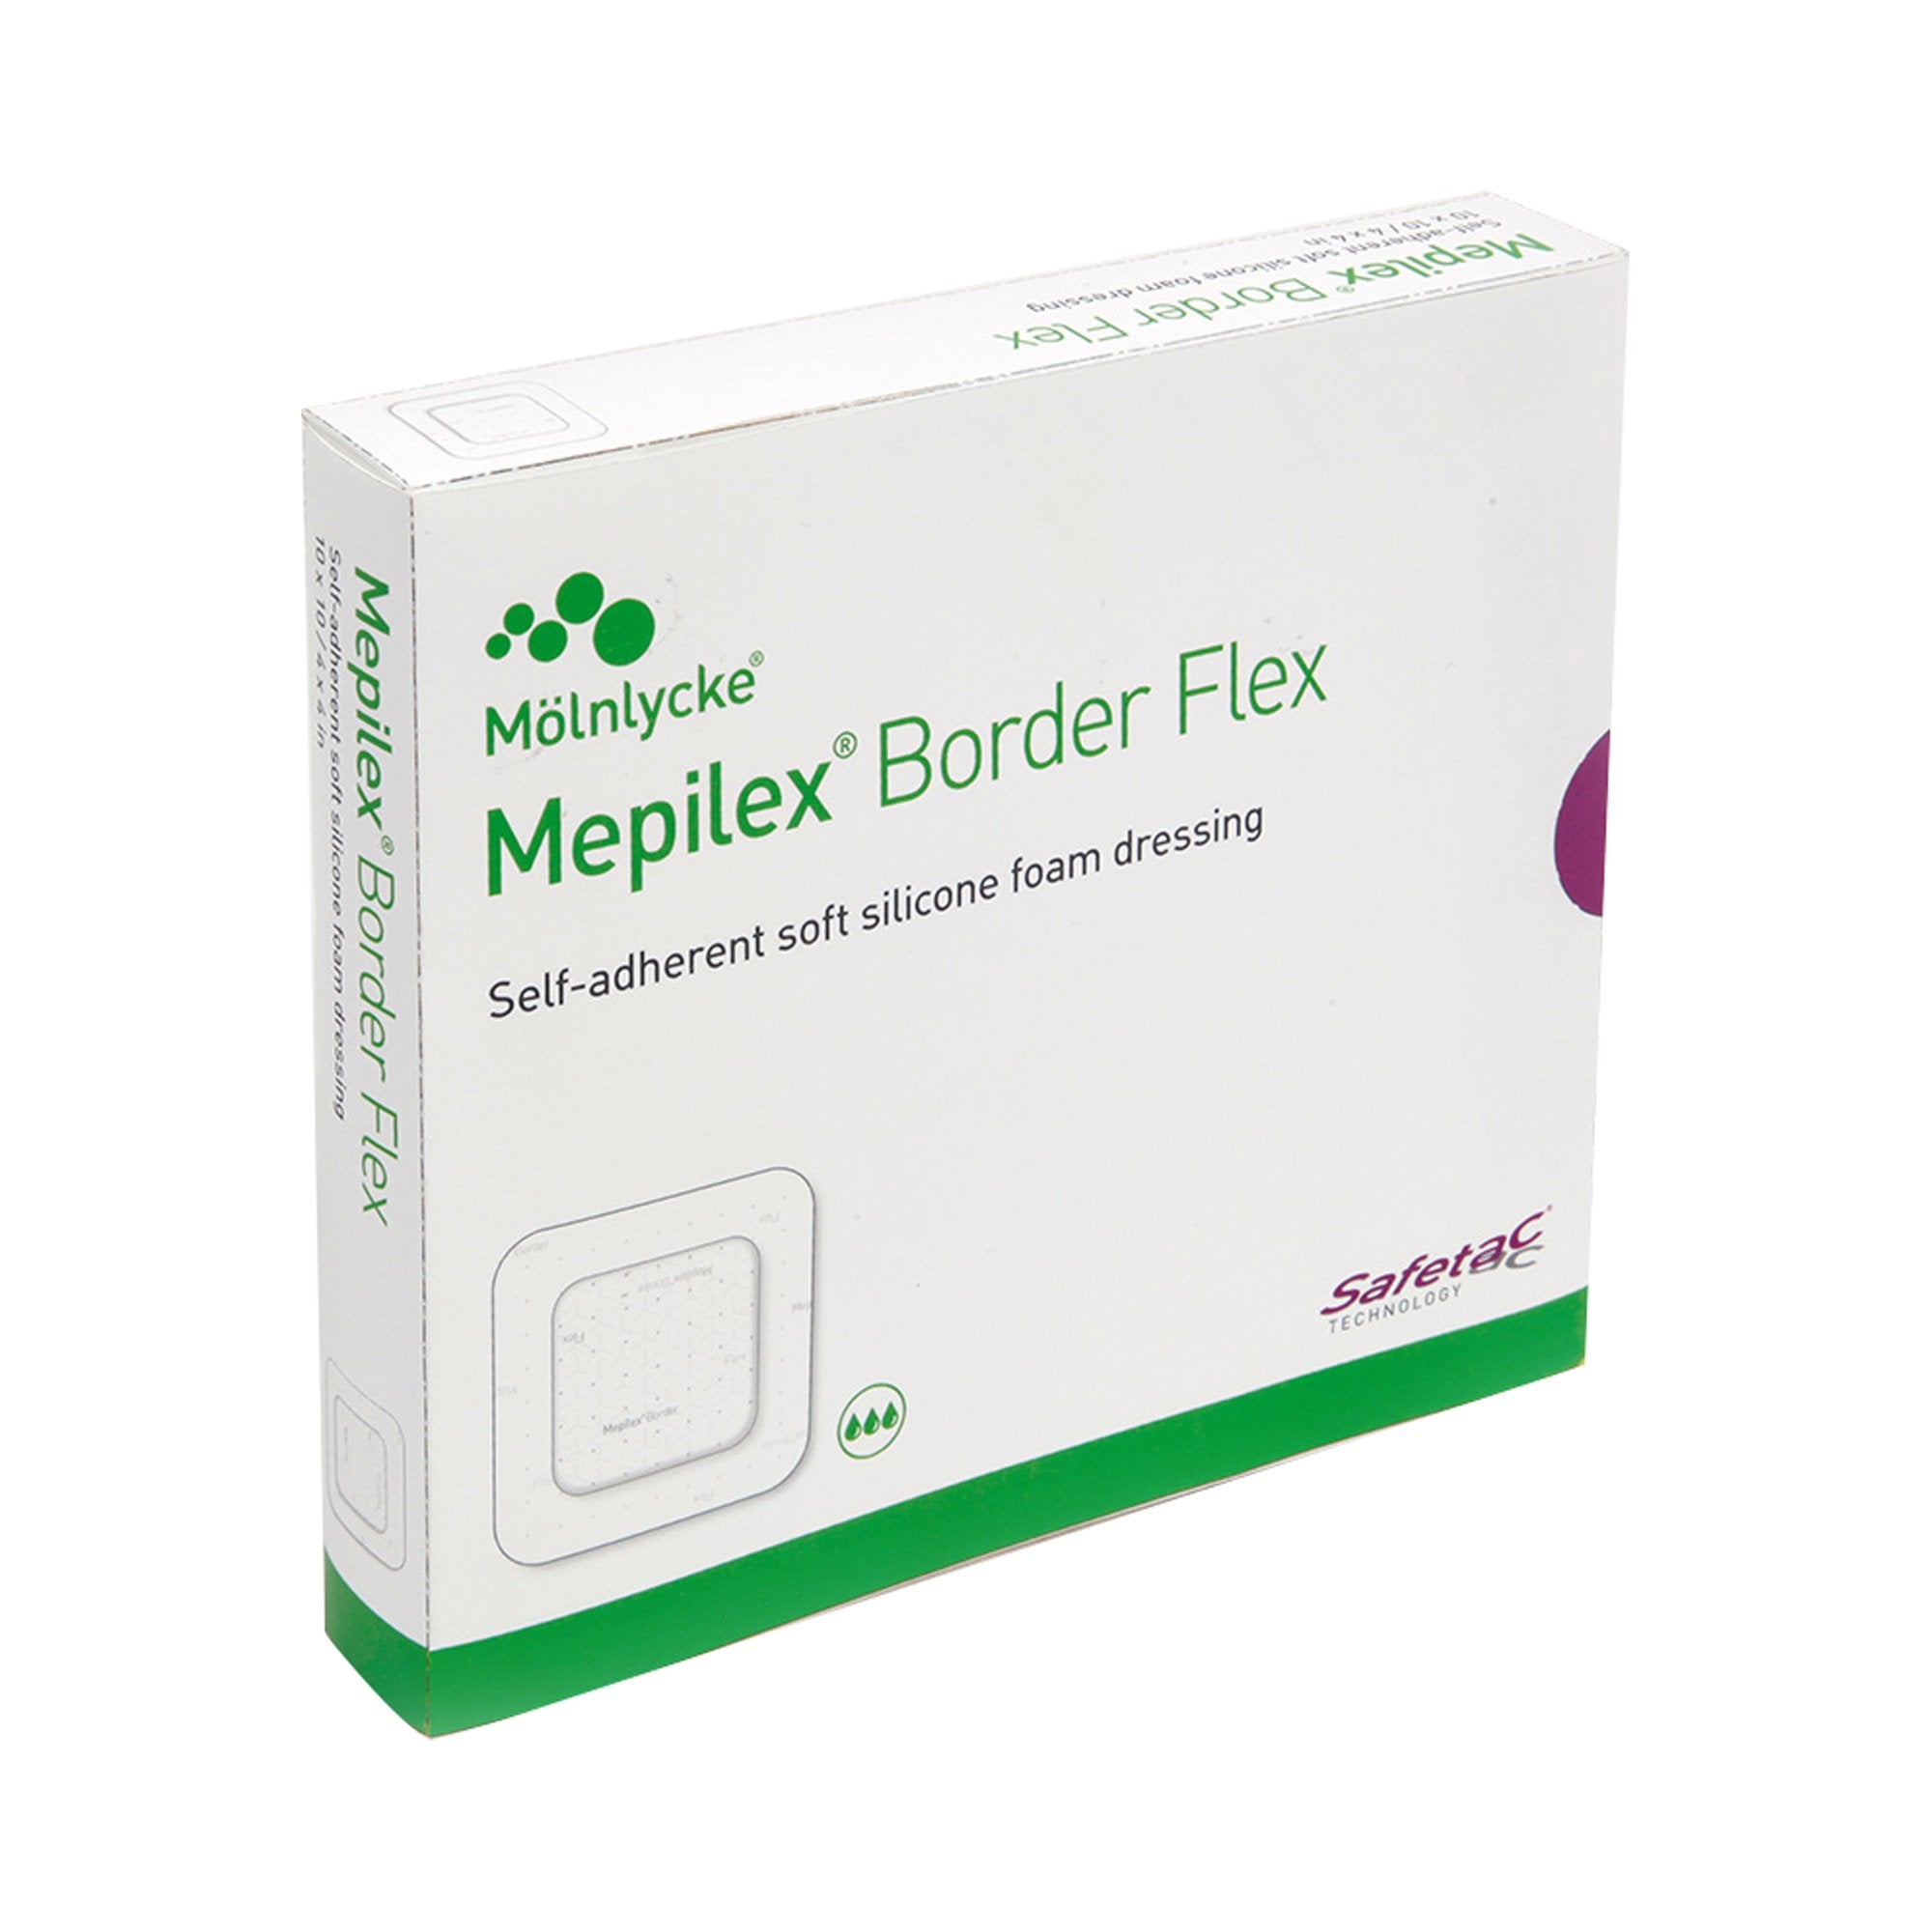 Foam Dressing Mepilex® Border Flex 6 X 6 Inch With Border Film Backing Silicone Adhesive Square Sterile